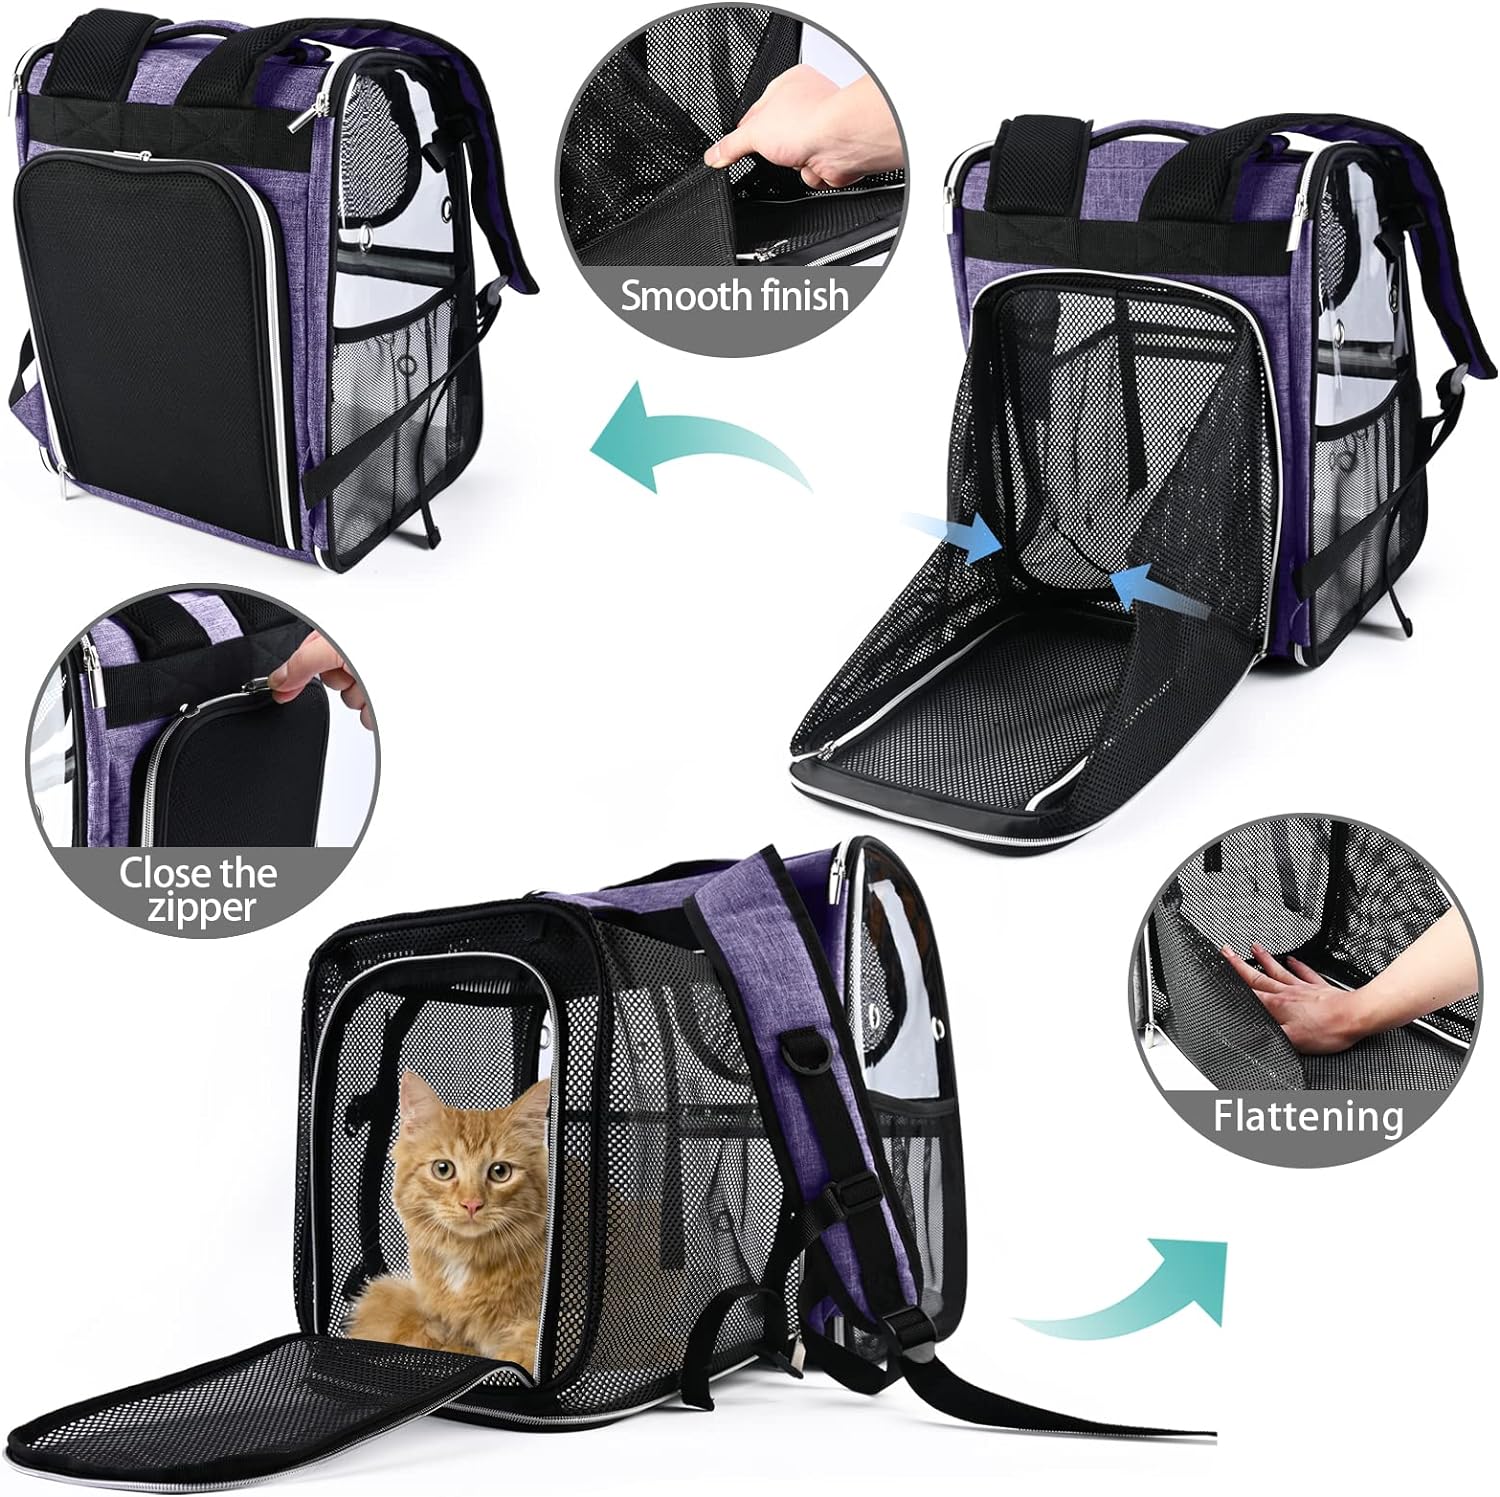 Mochila expandible para transportar mascotas, mochila de burbujas para gatos